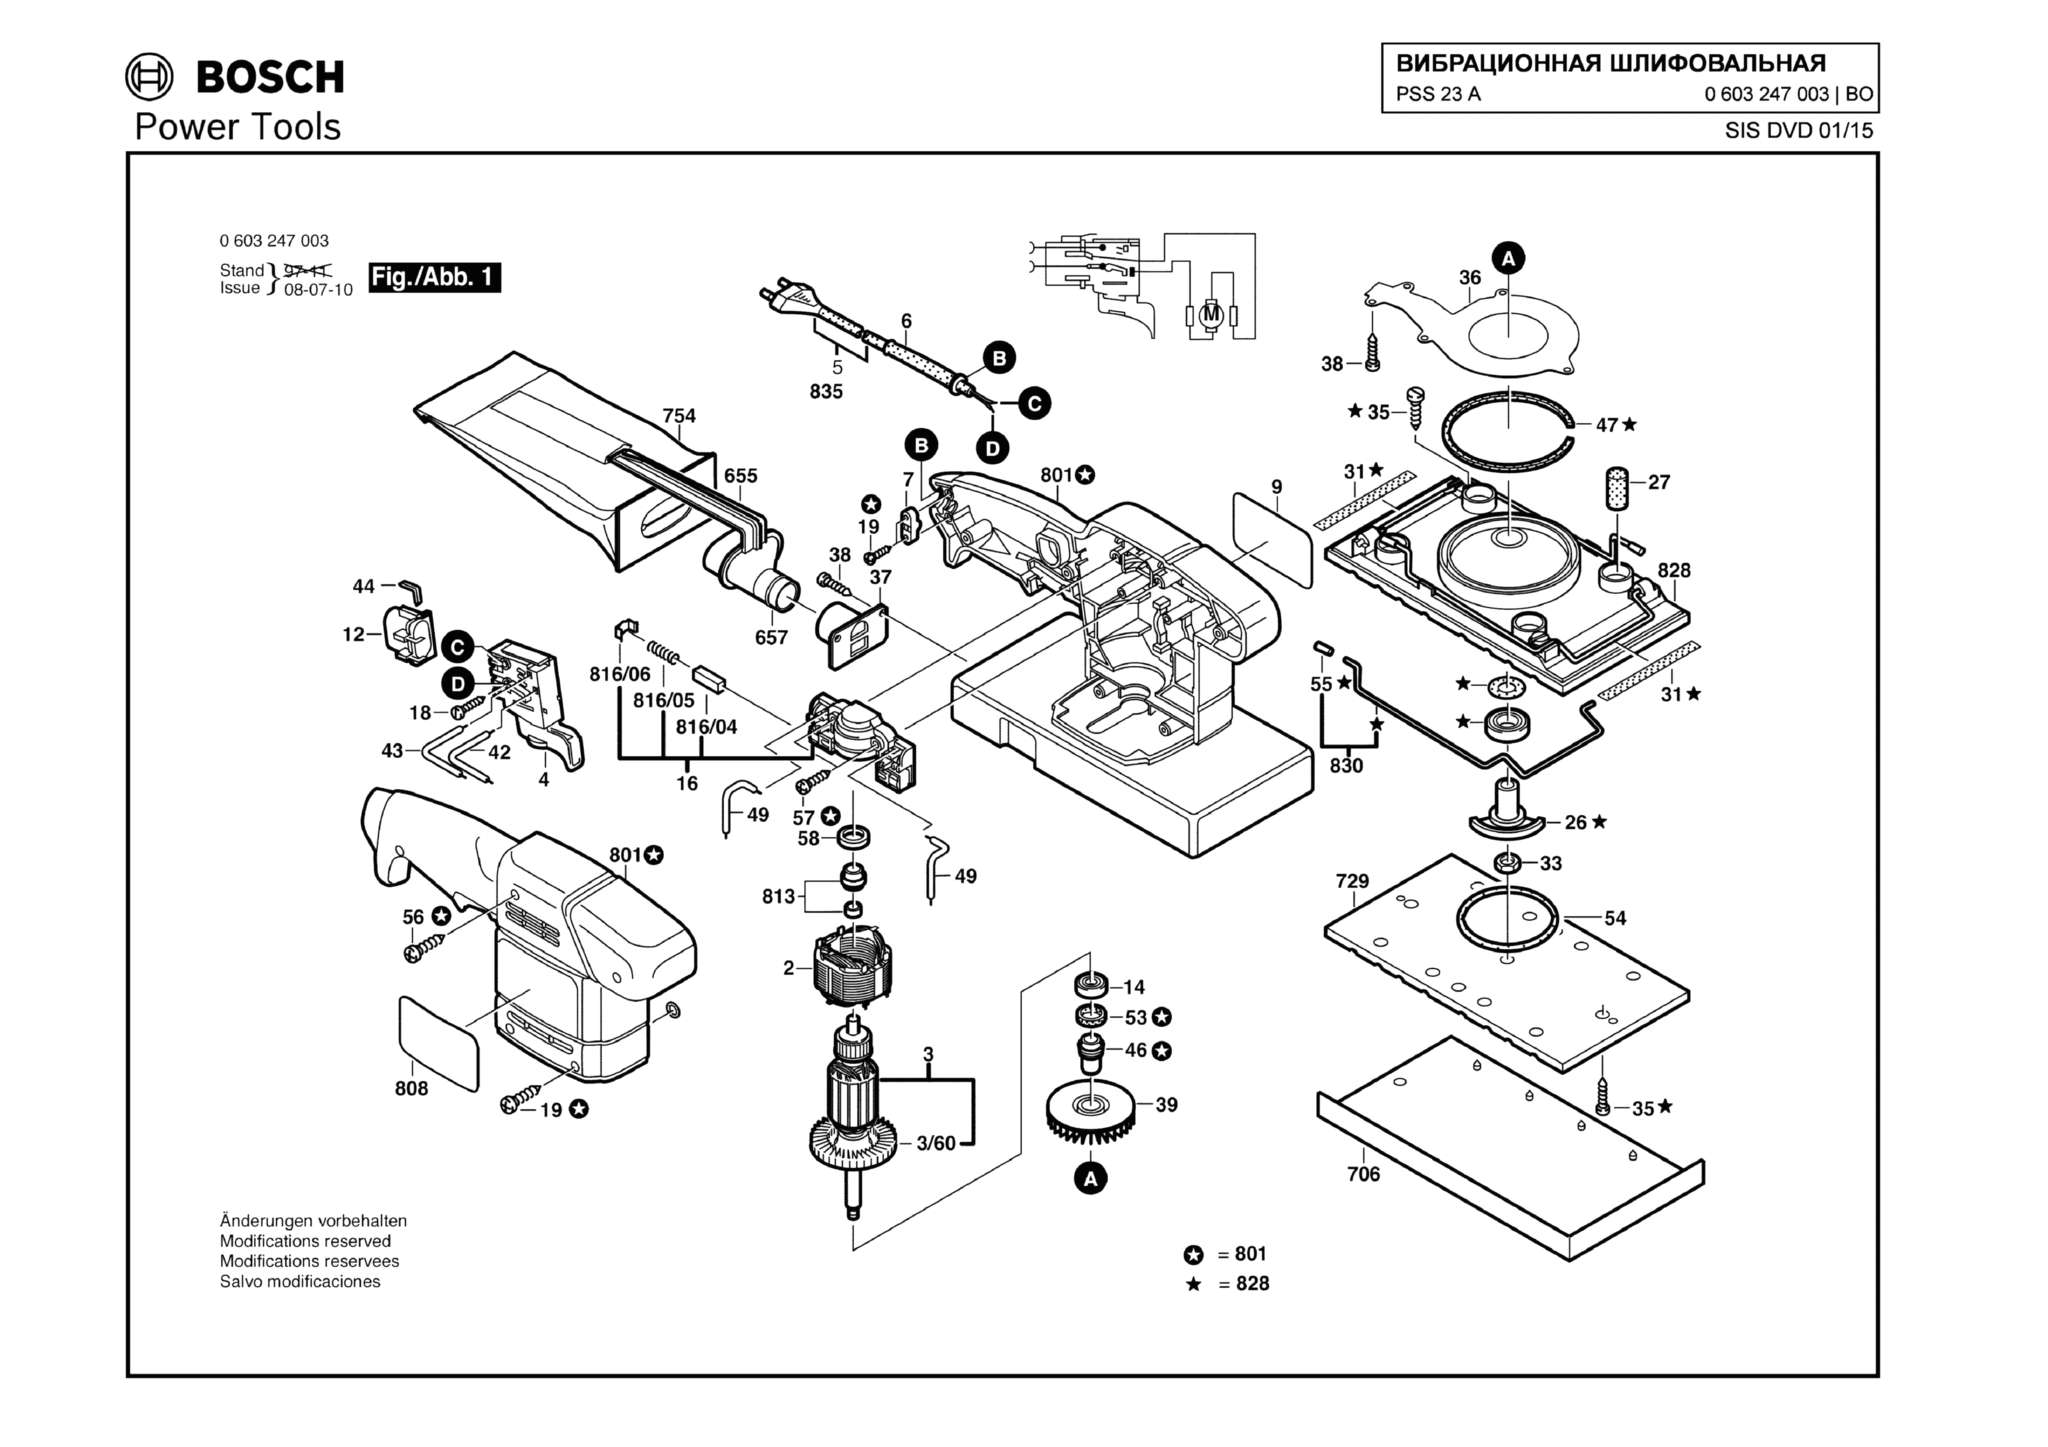 Запчасти, схема и деталировка Bosch PSS 23 A (ТИП 0603247003)